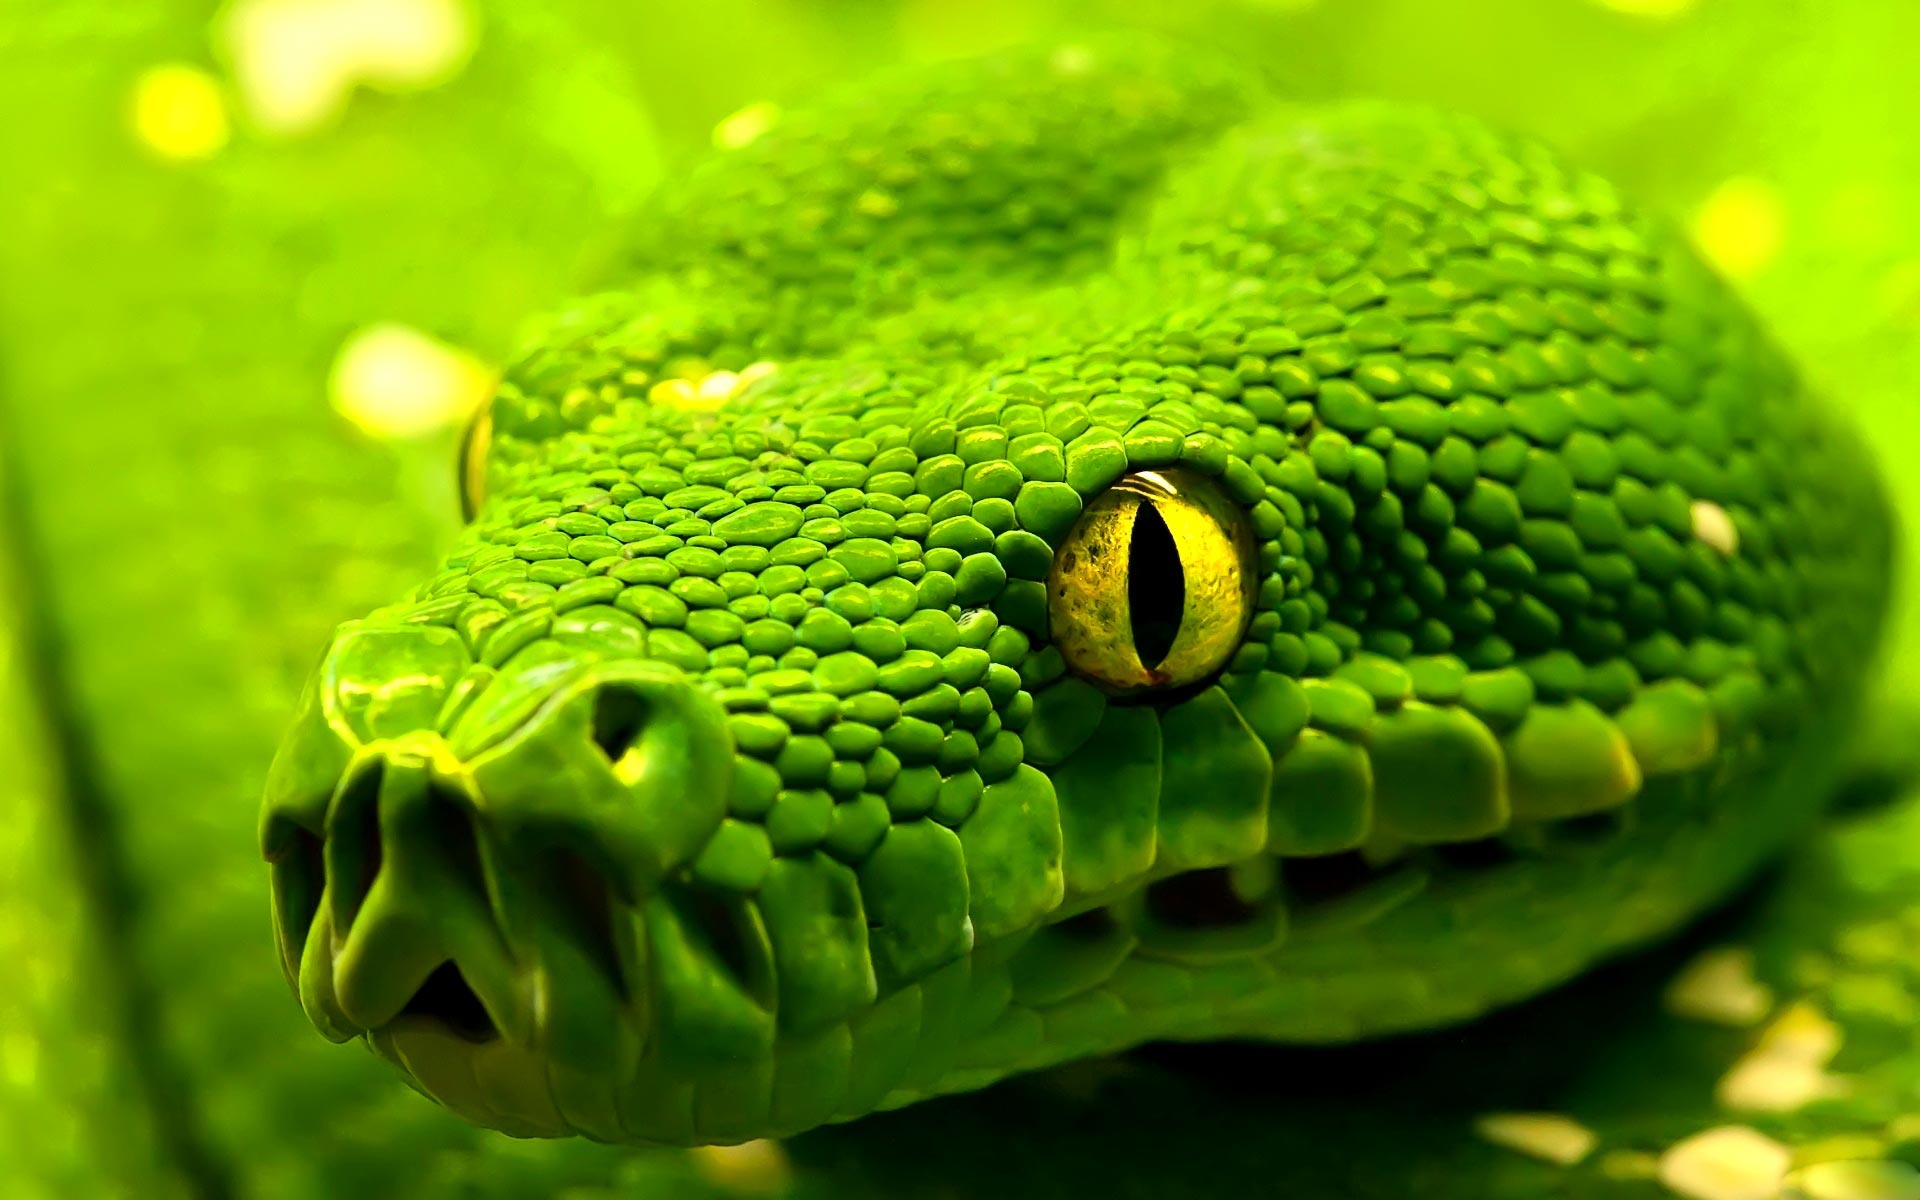 beautiful green hd snake wallpapers